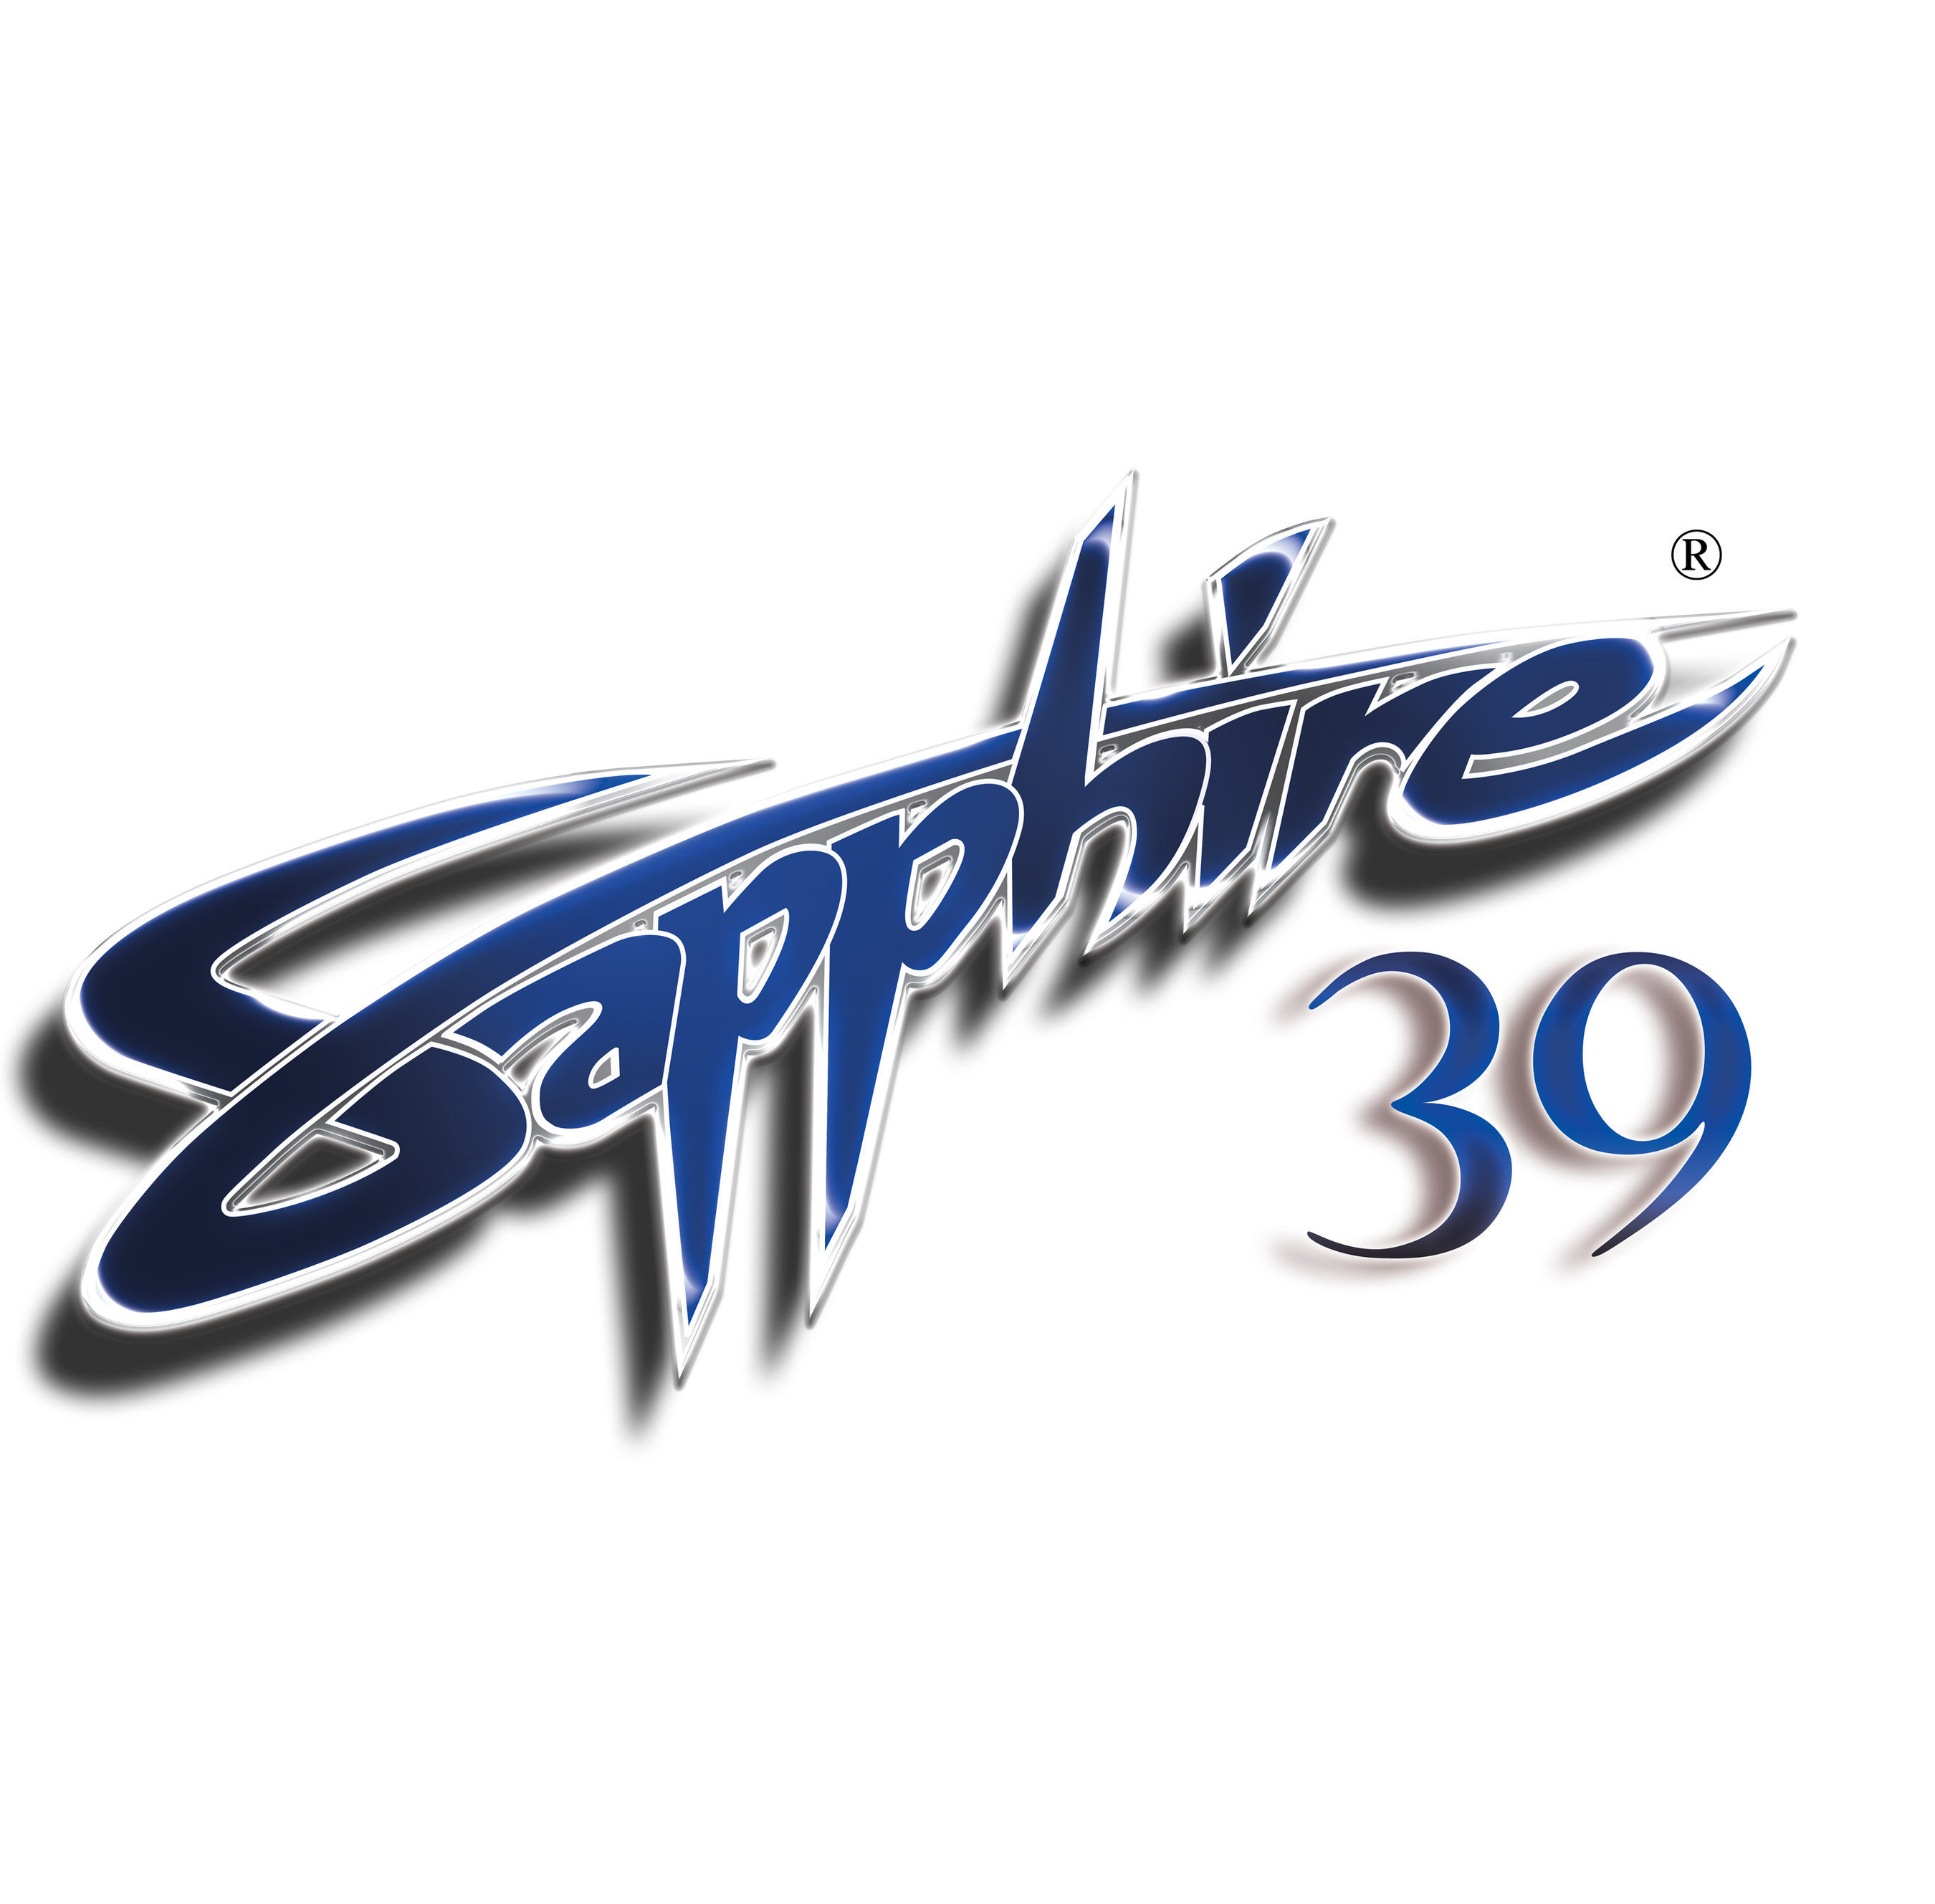 Saphir Group. Saphir 39. Sapphire Group logo.